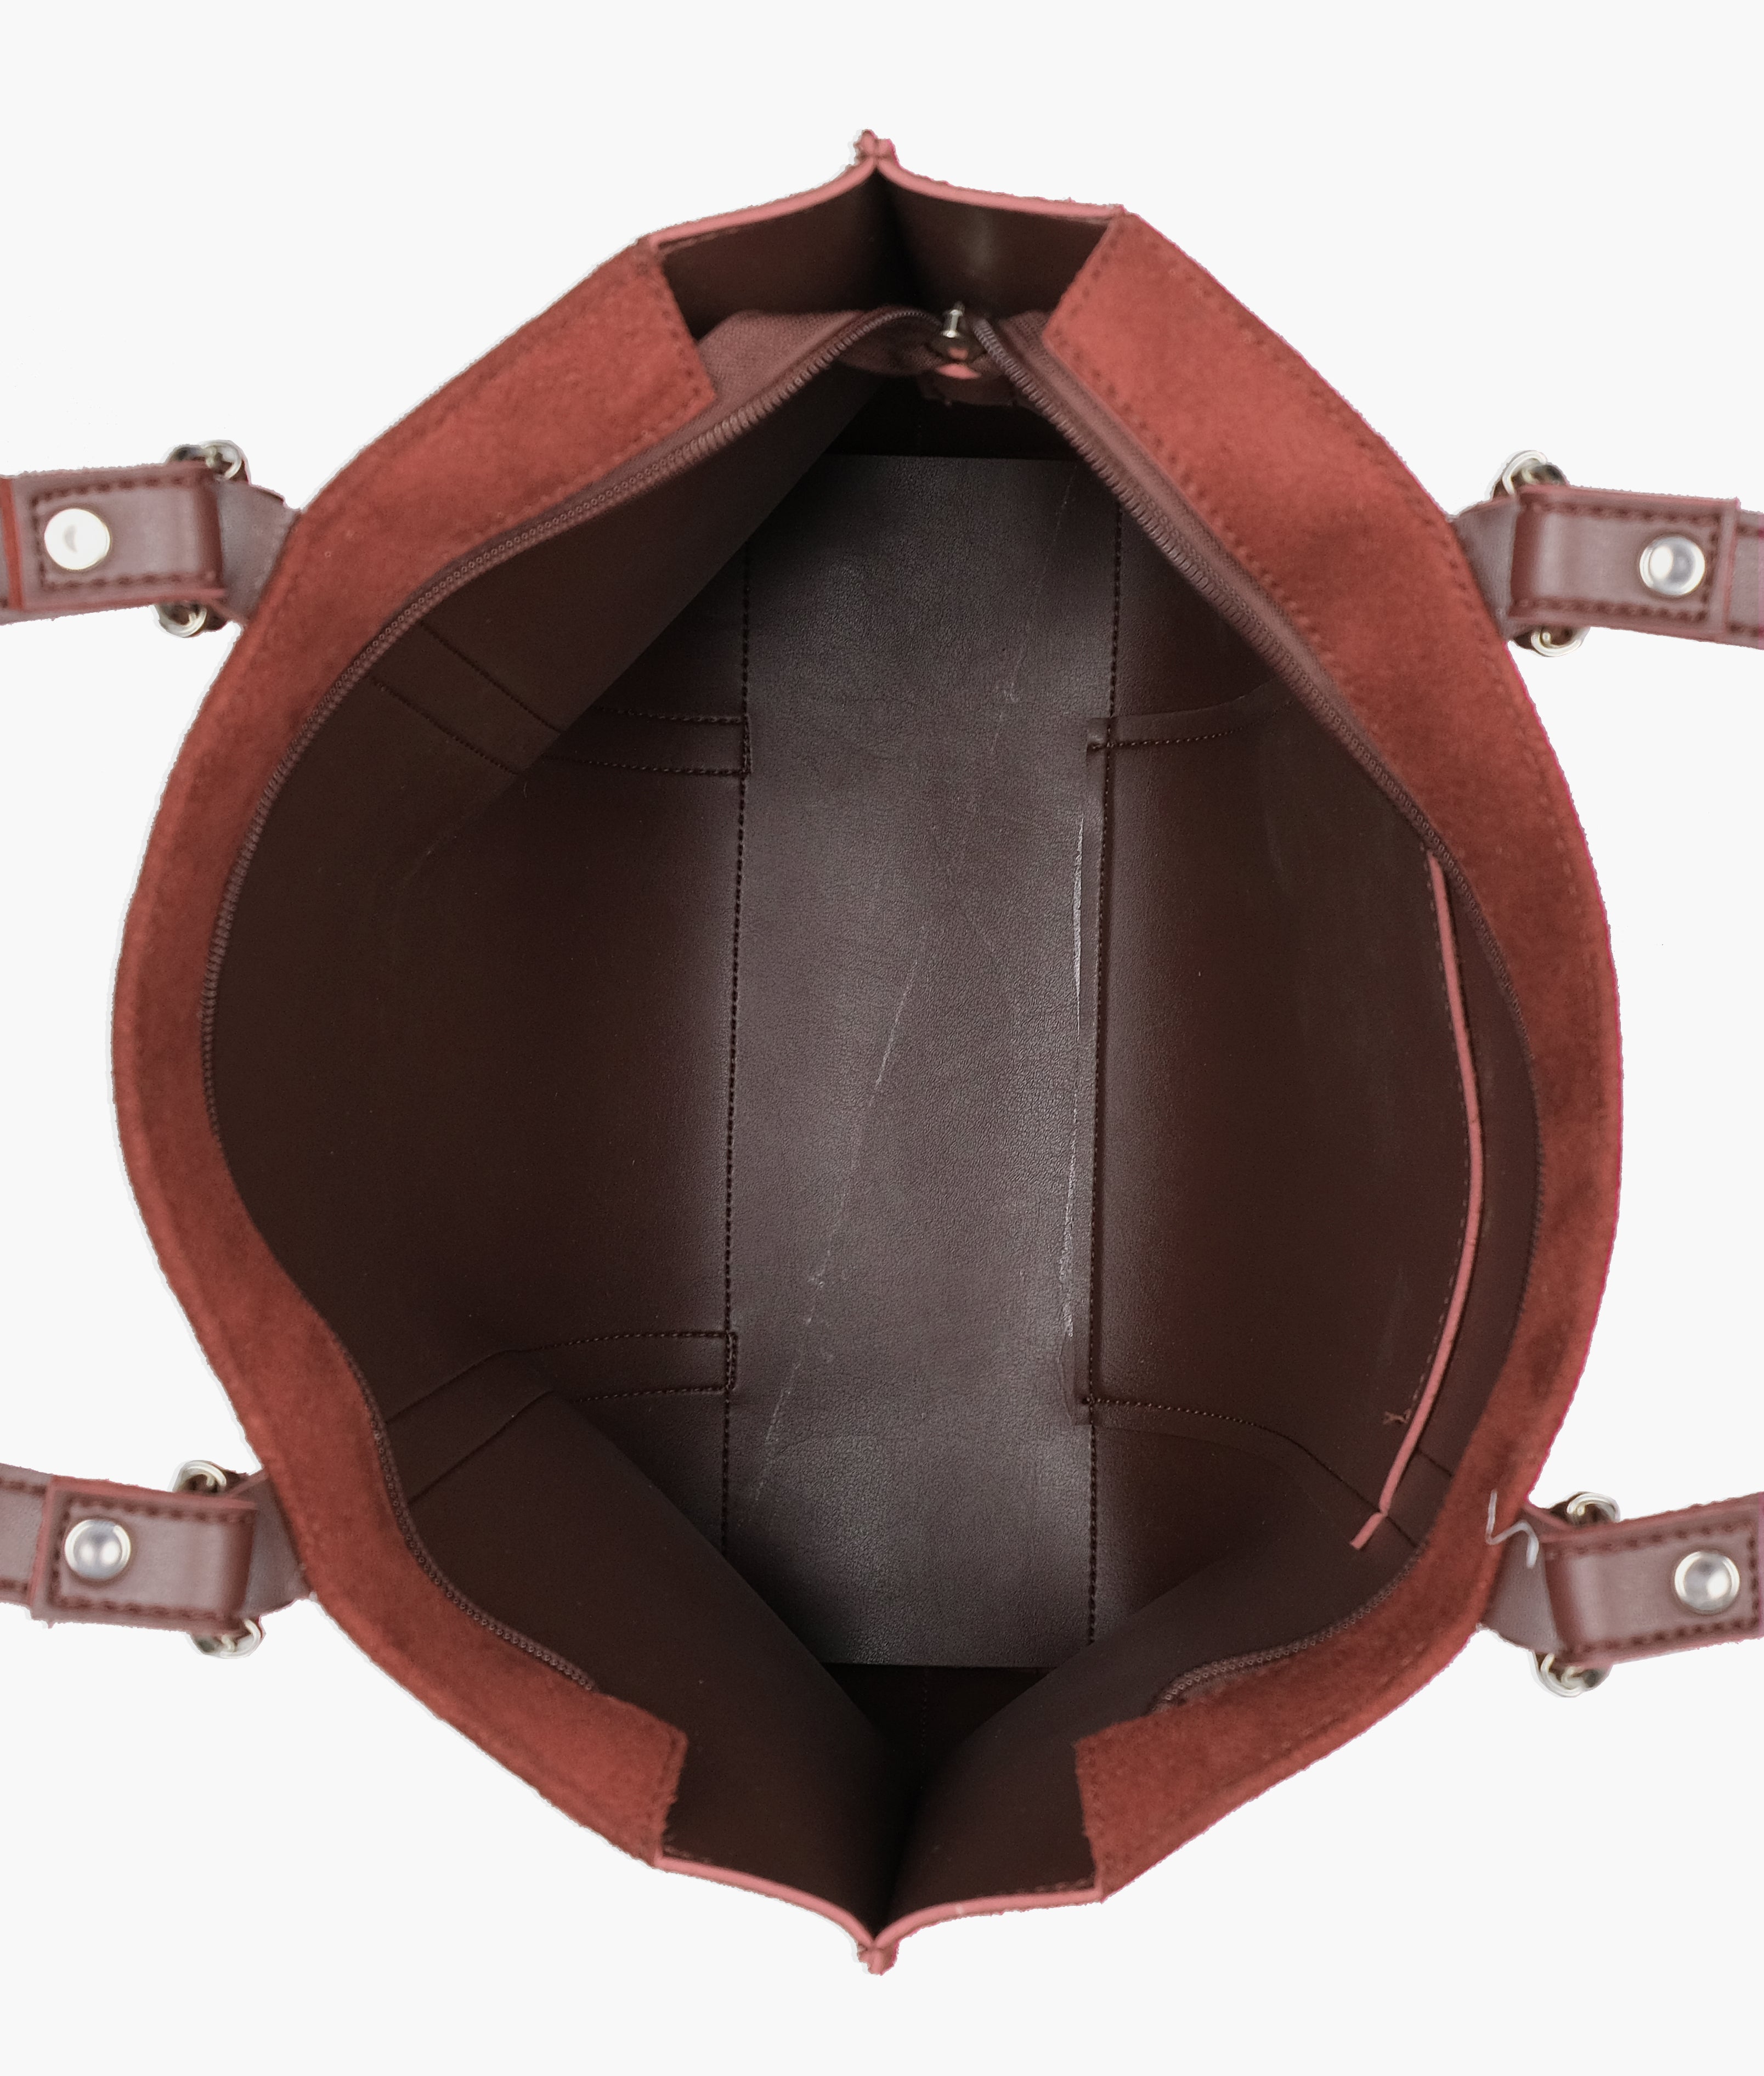 Dark brown suede double-handle tote bag